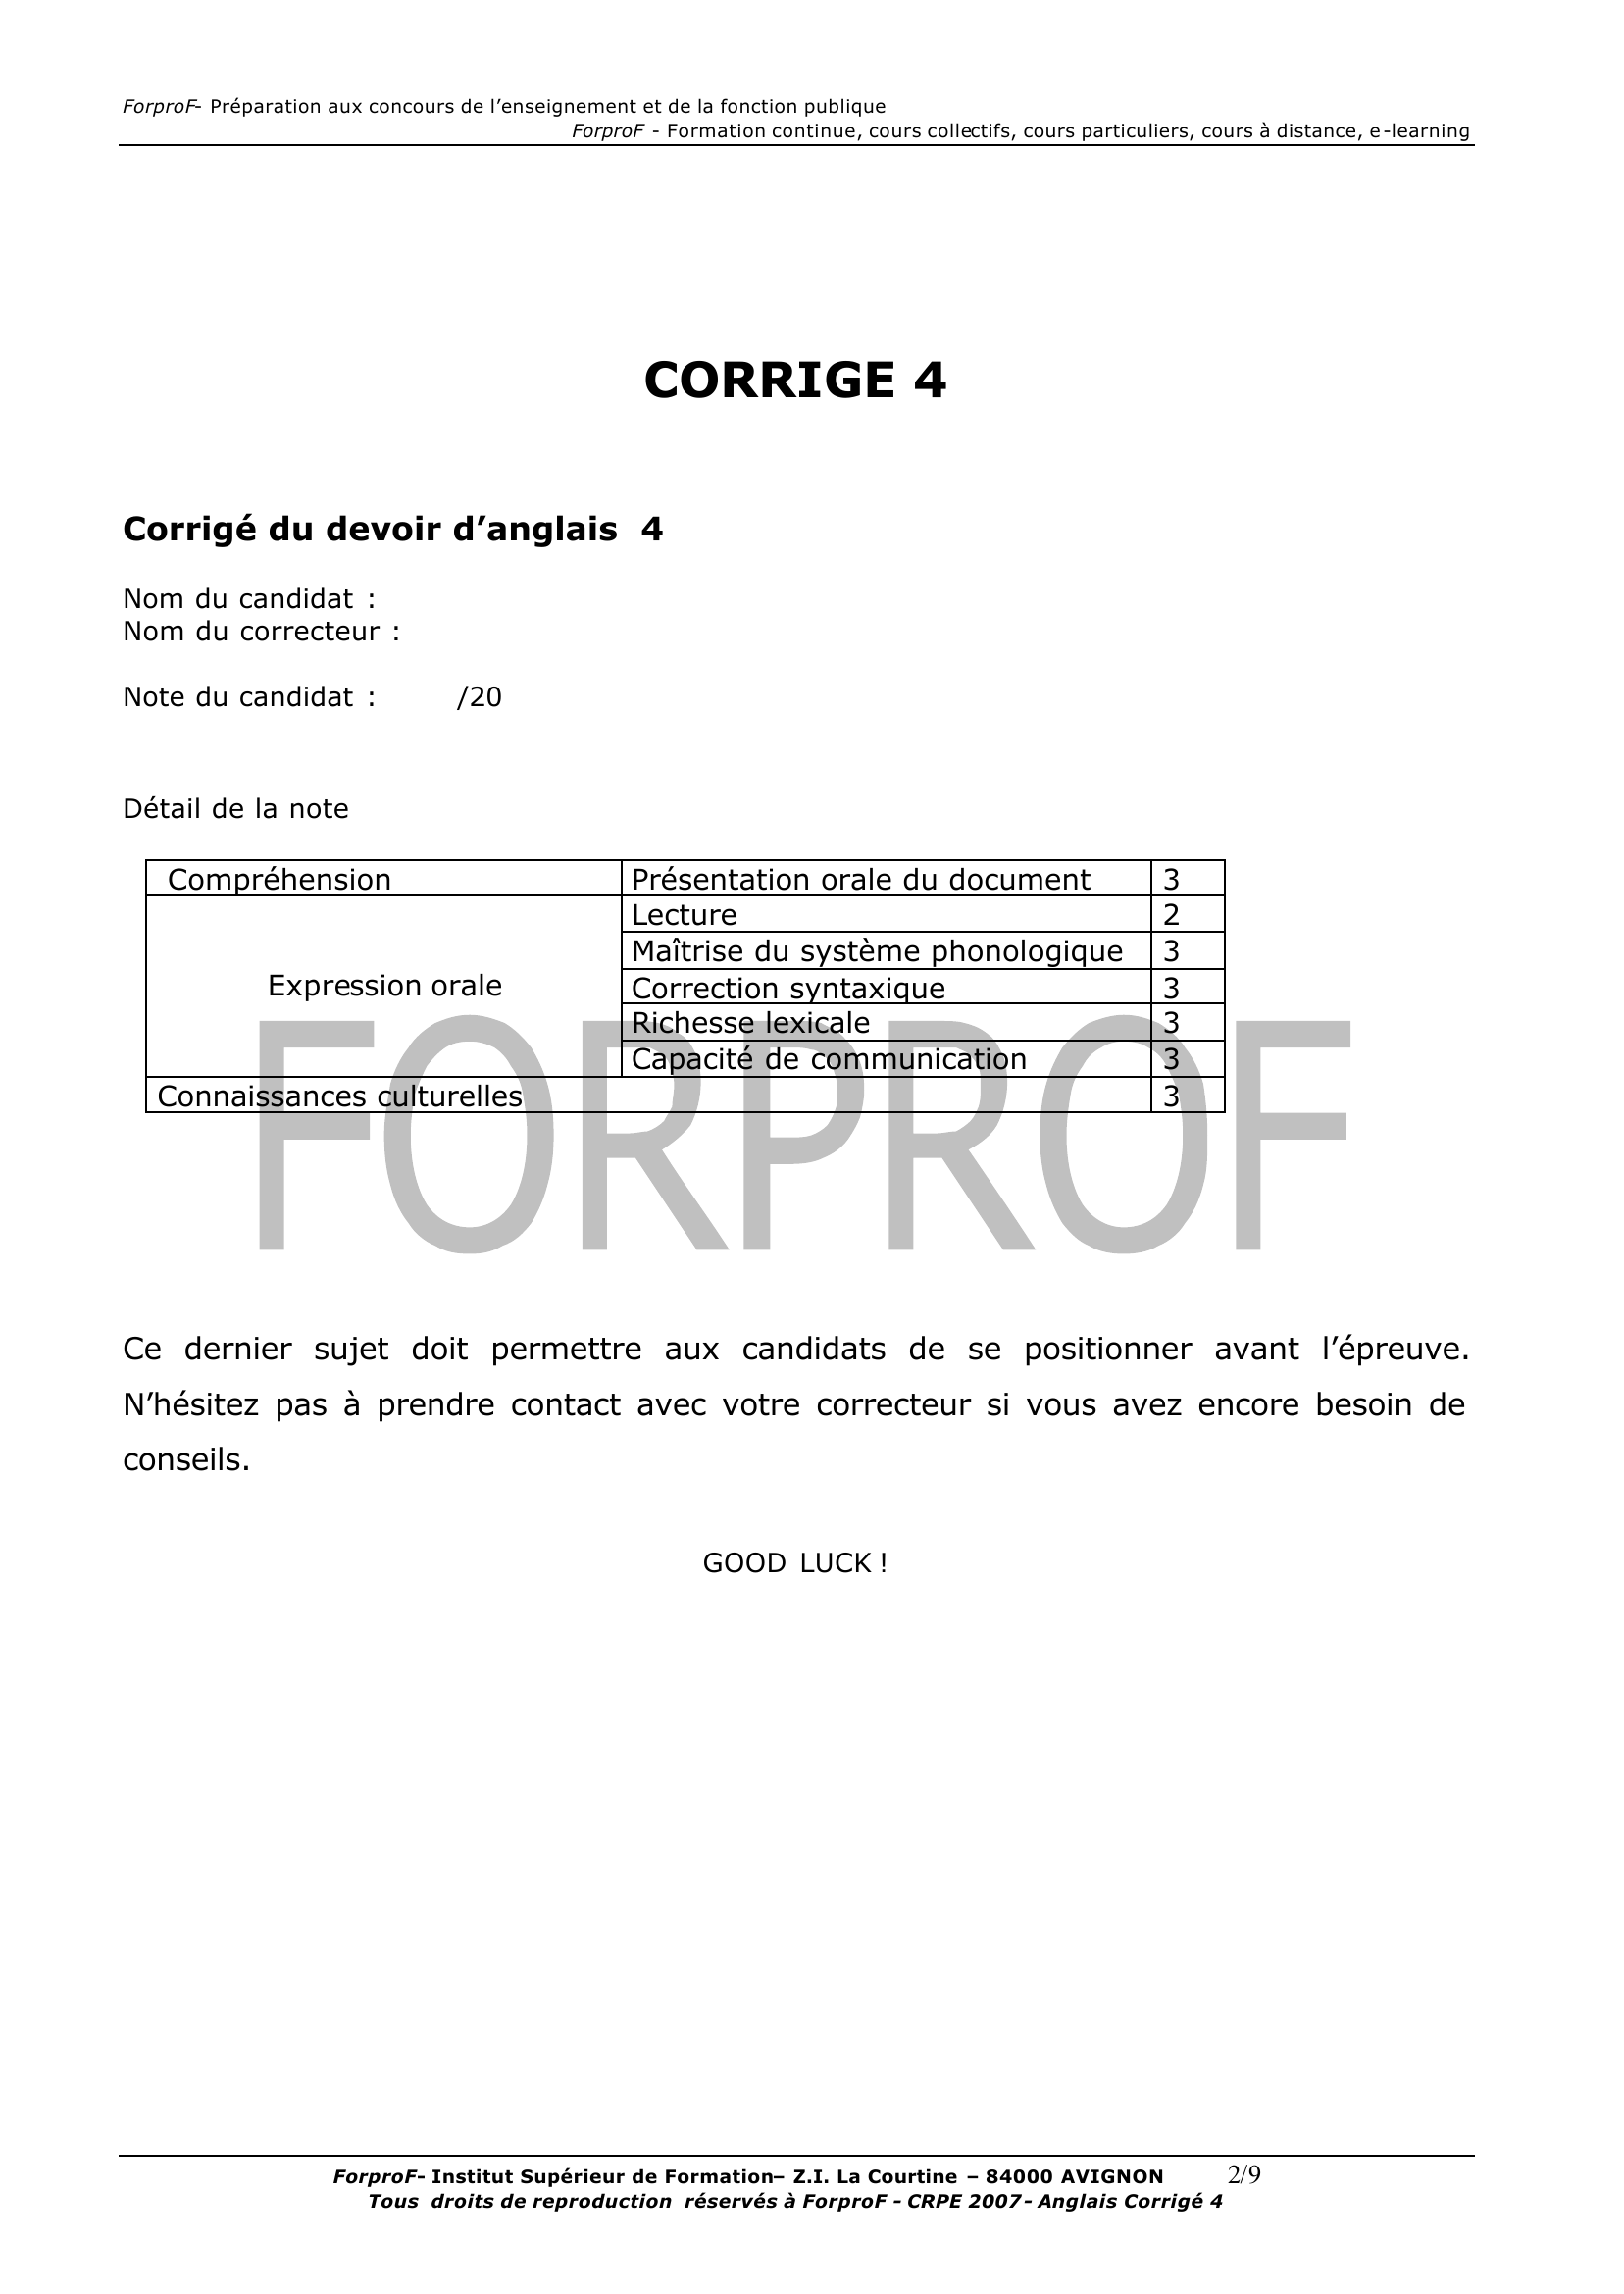 Prévisualisation du document CRPE SESSION 2007

FORPROF

ANGLAIS
Corrigé 4

Réf: CRFDAng - CRAng - CRFDAng2

N° Indigo : 08 2031 2031

Site Internet: http://www.